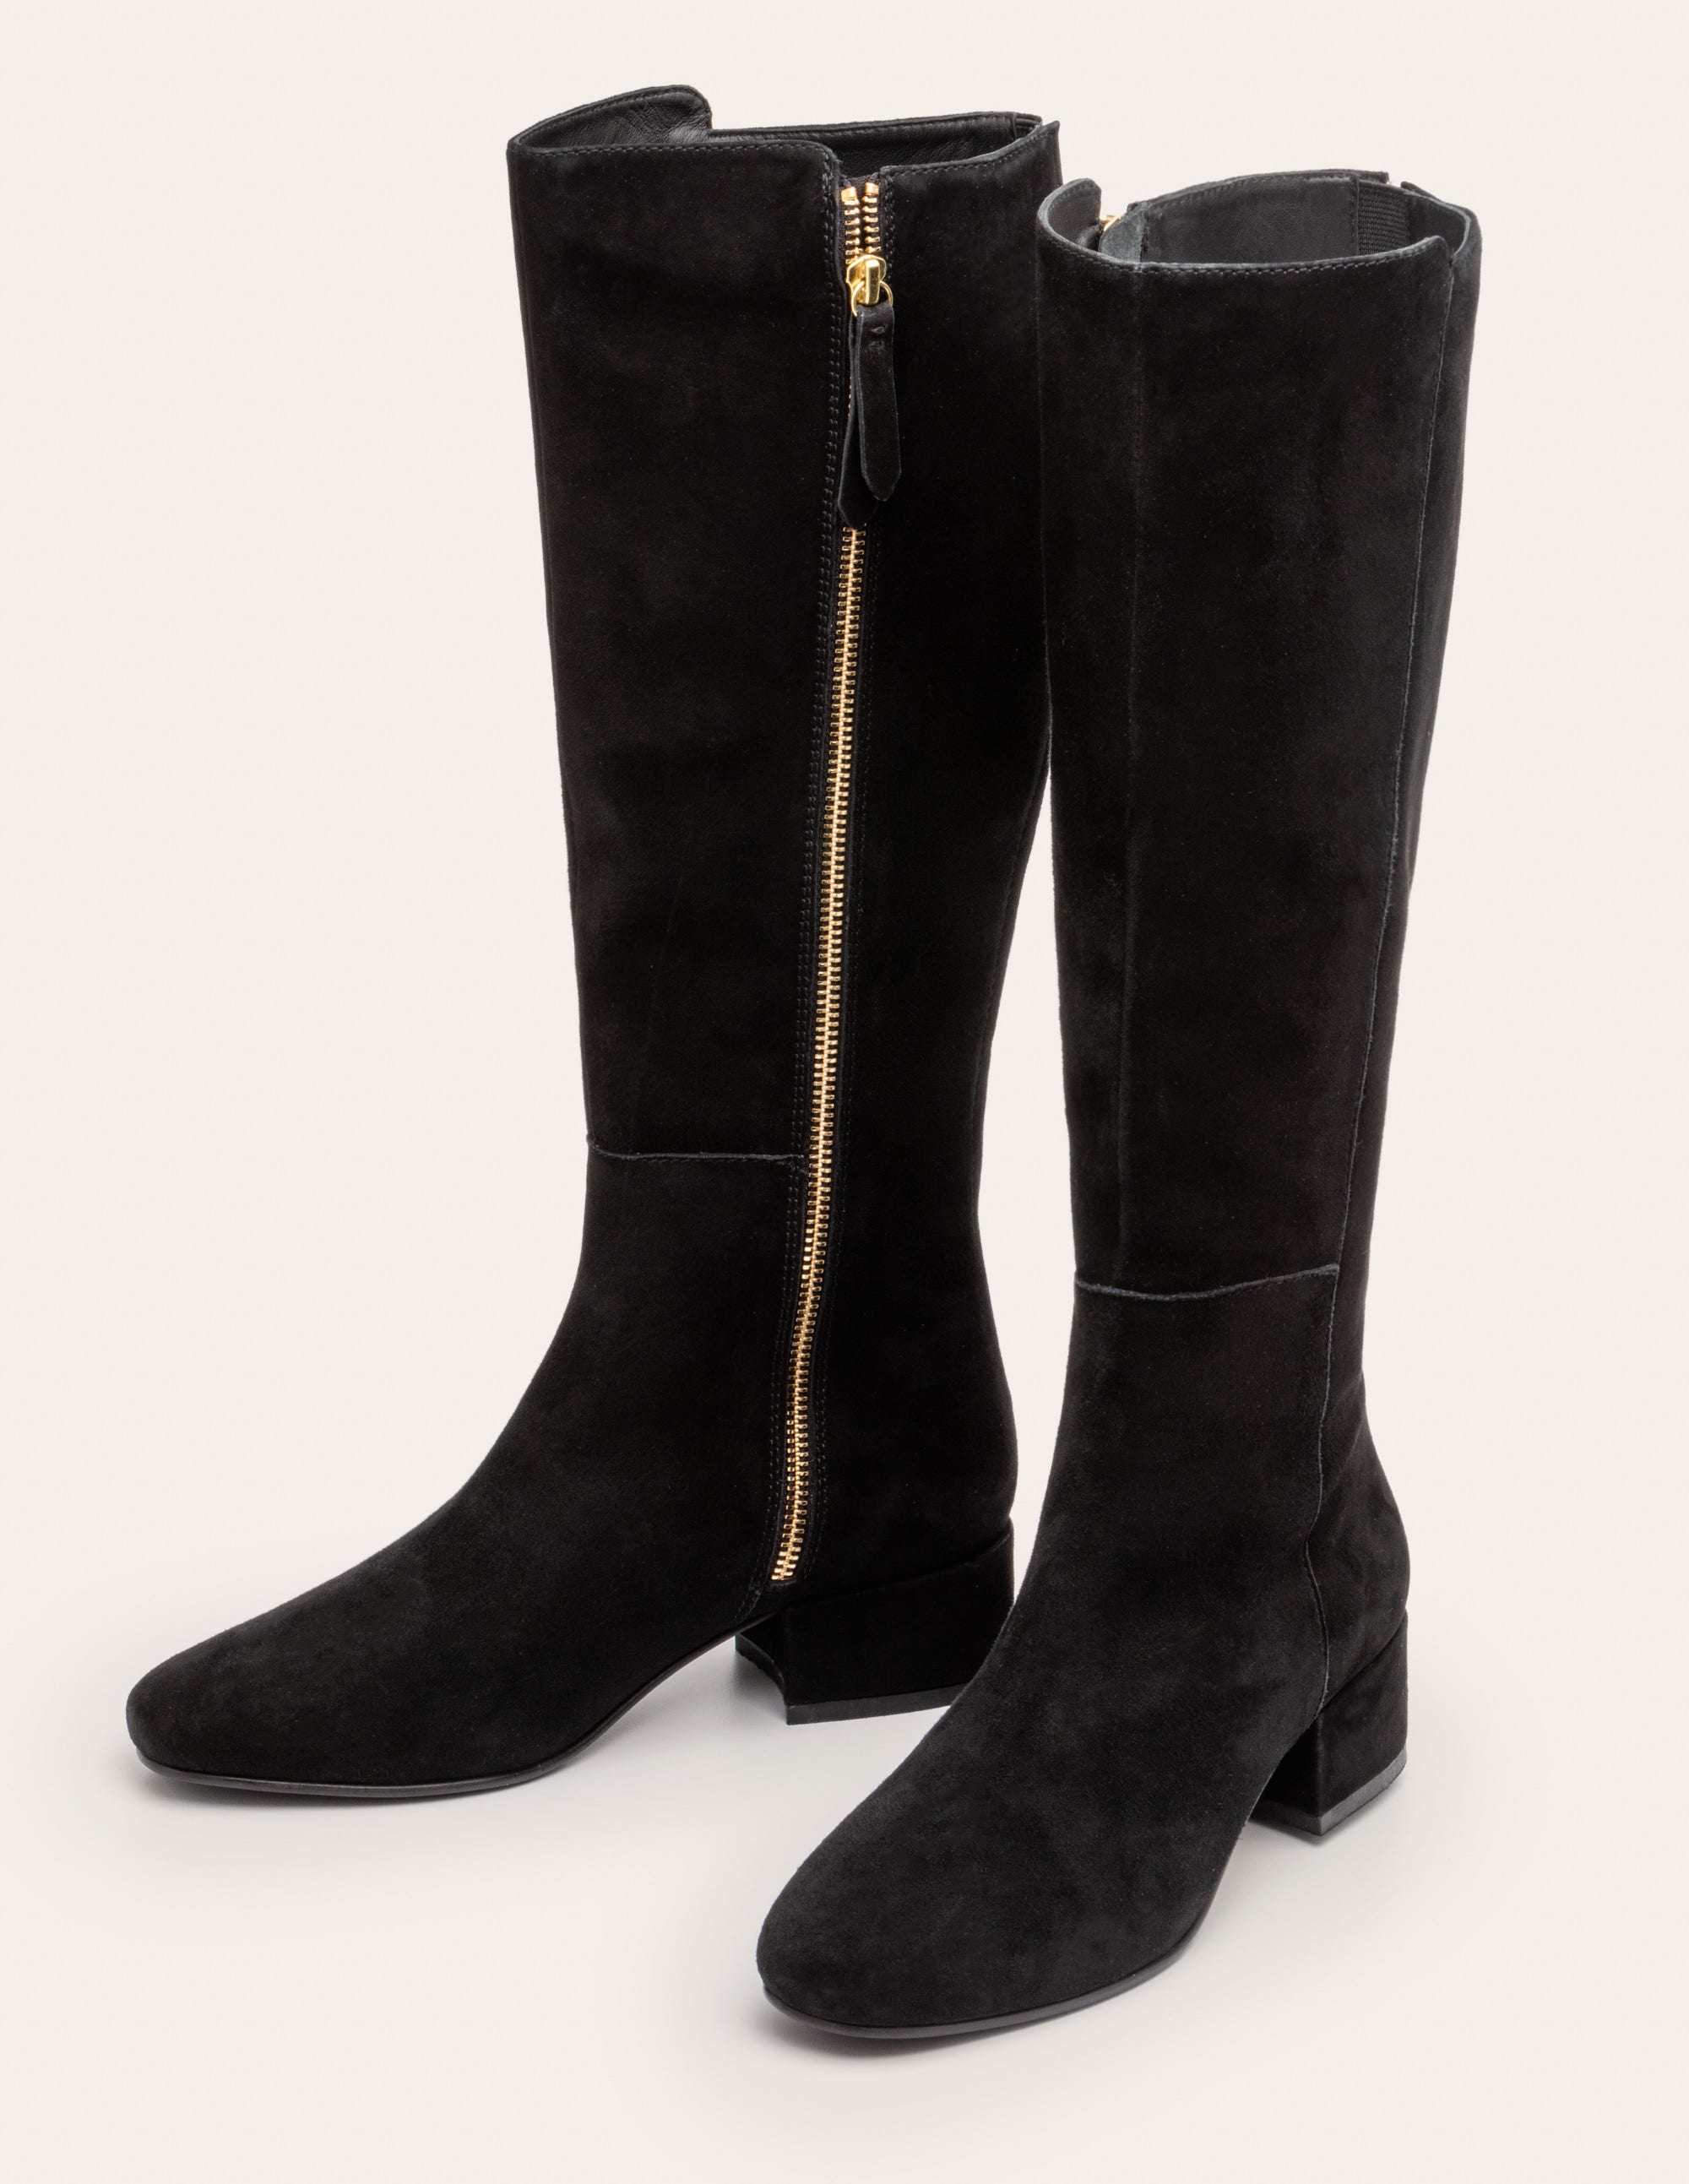 Worcester Knee High Boots - Black 